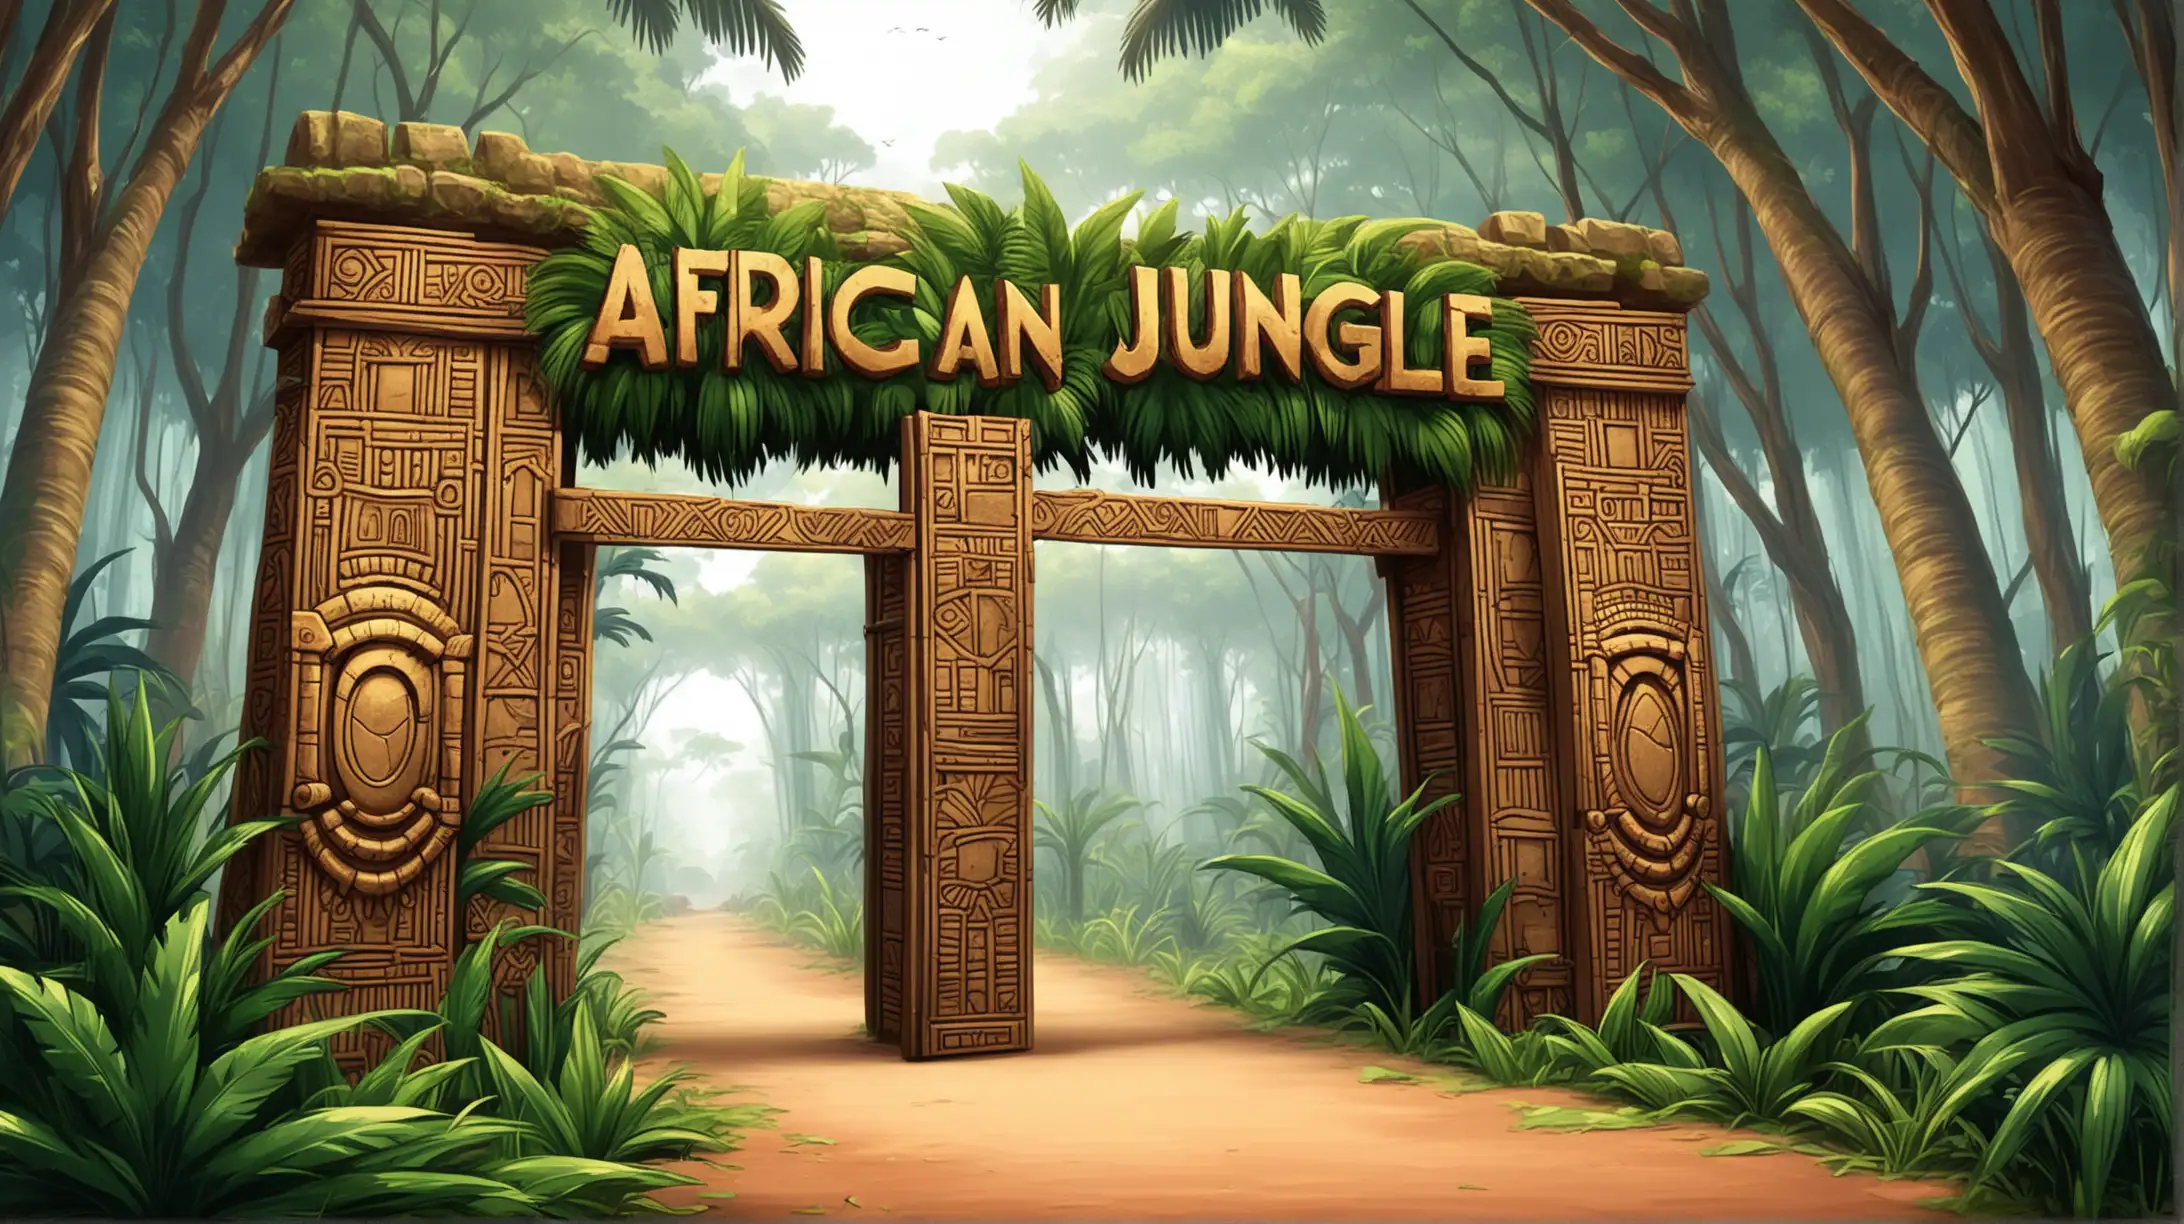 Majestic African Jungle Gate at Sunset